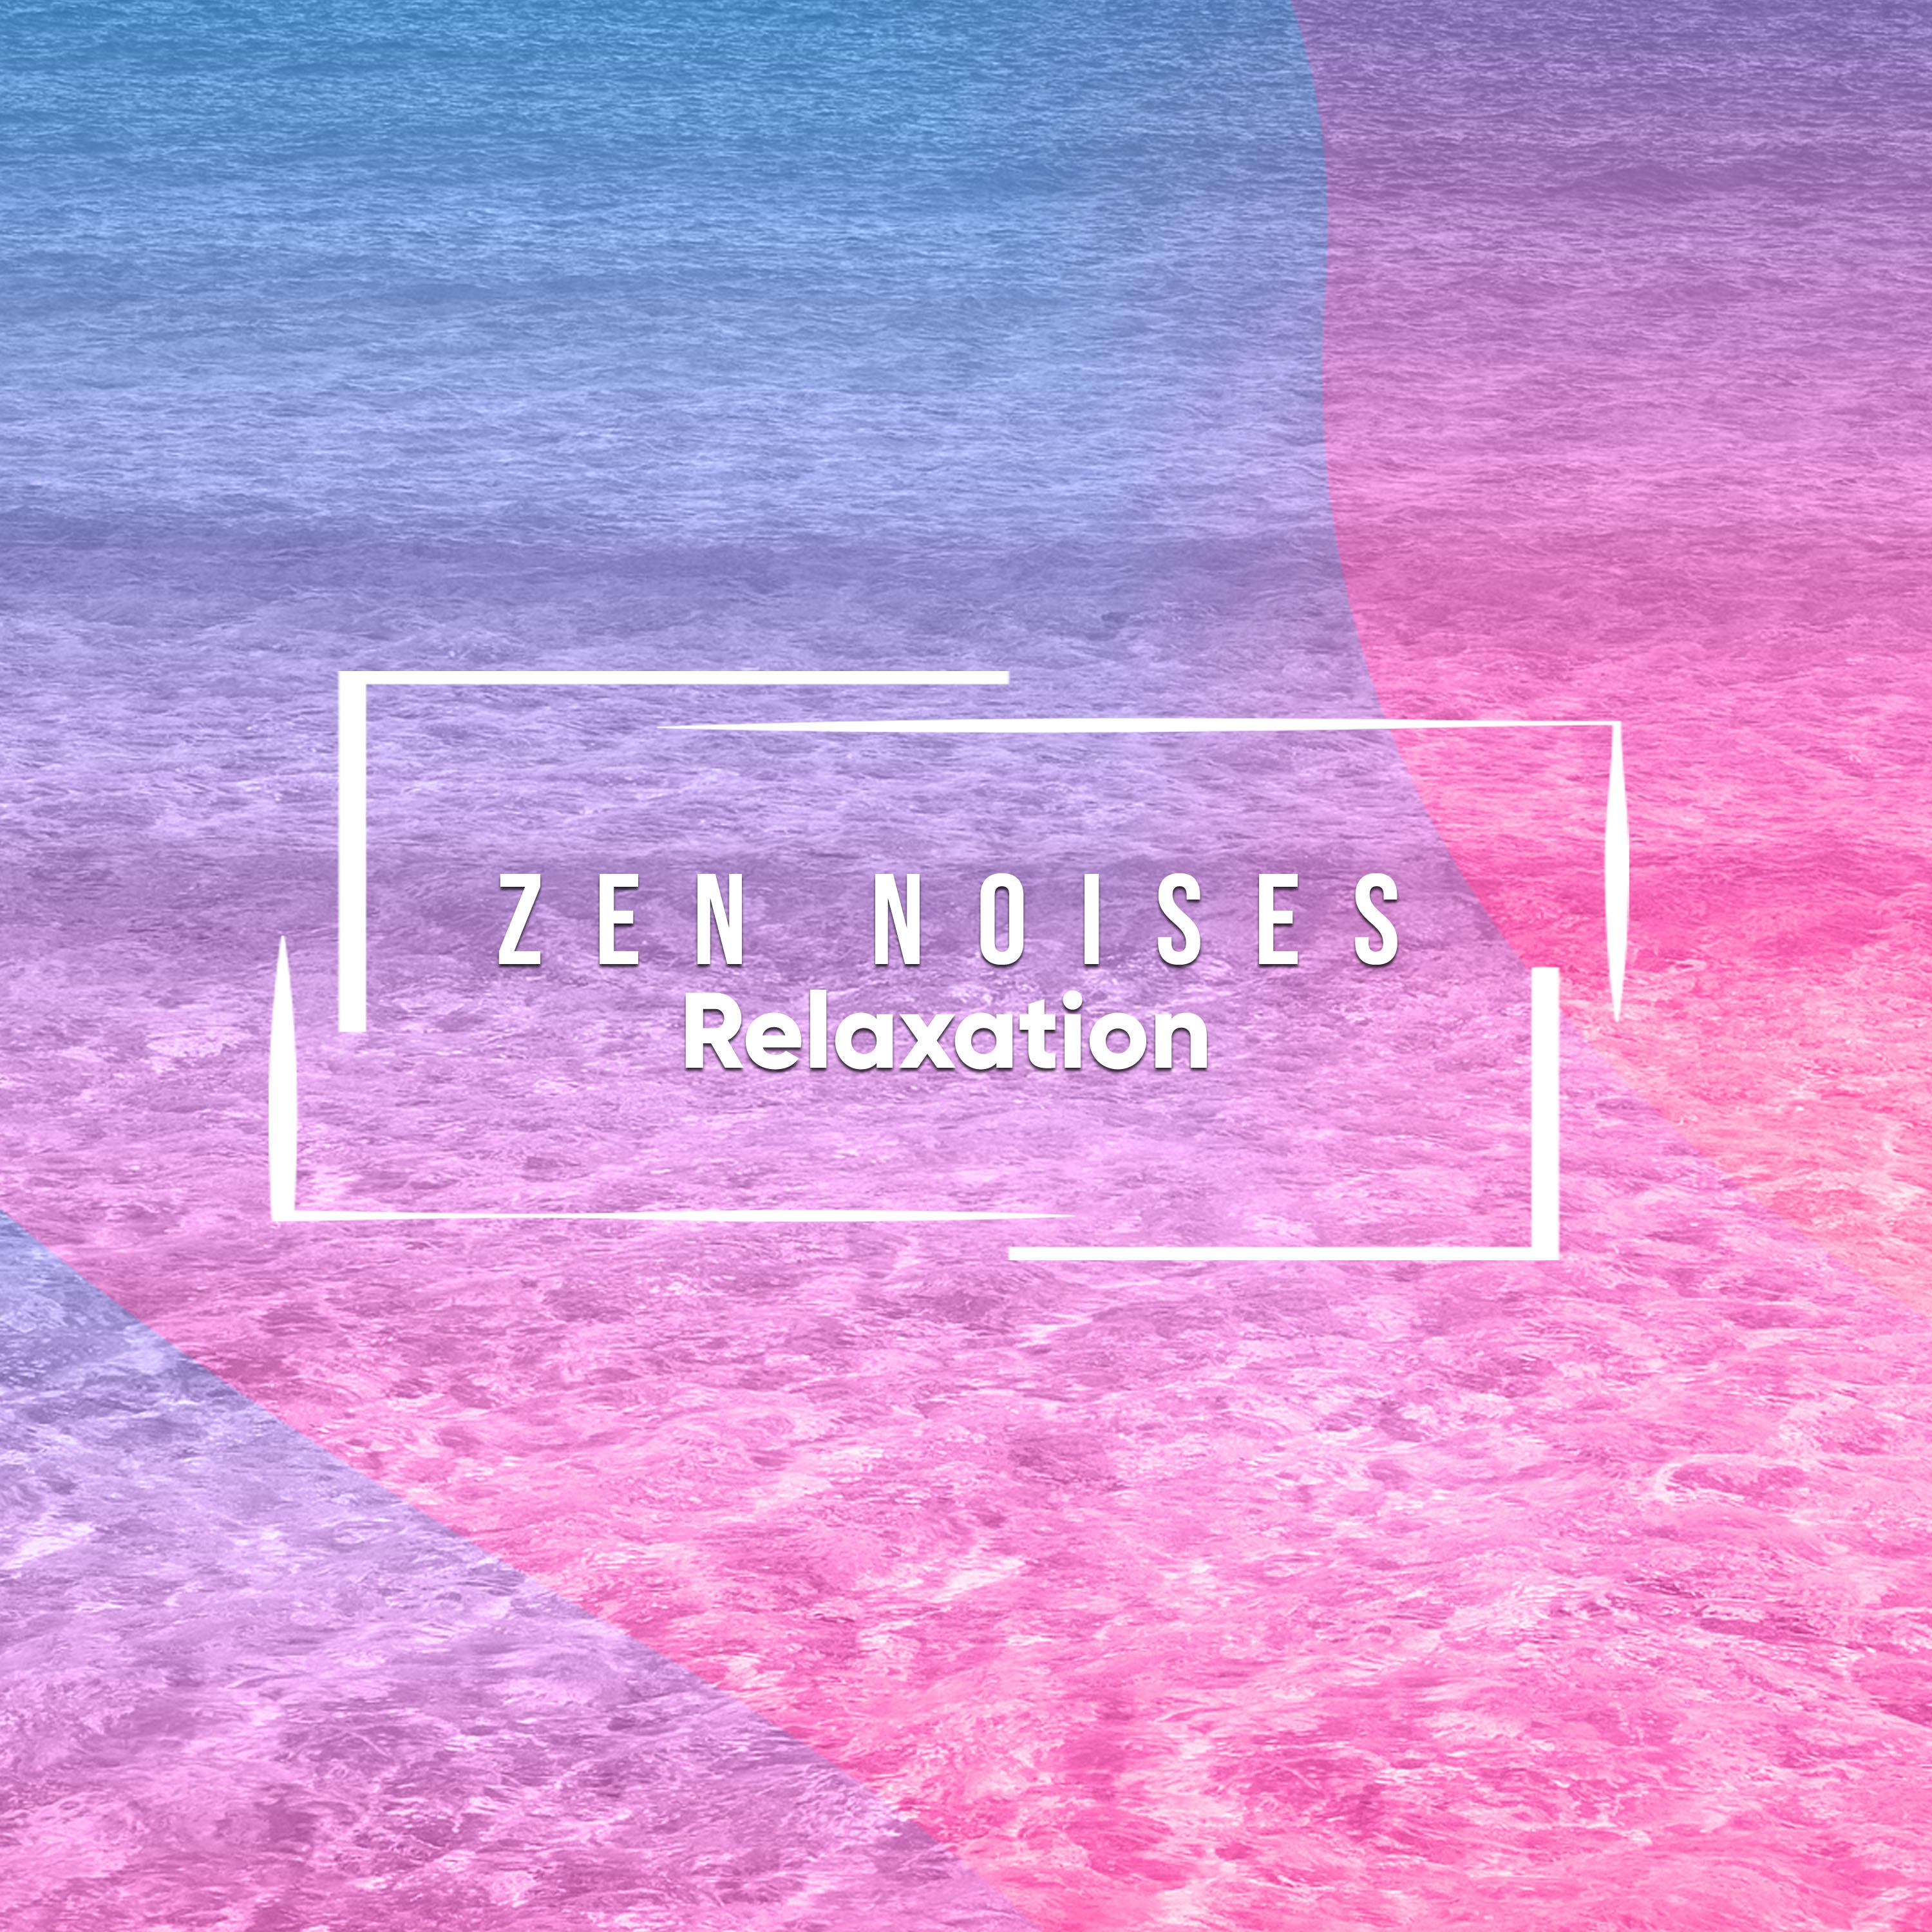 18 Zen Noises for Ultimate Relaxation